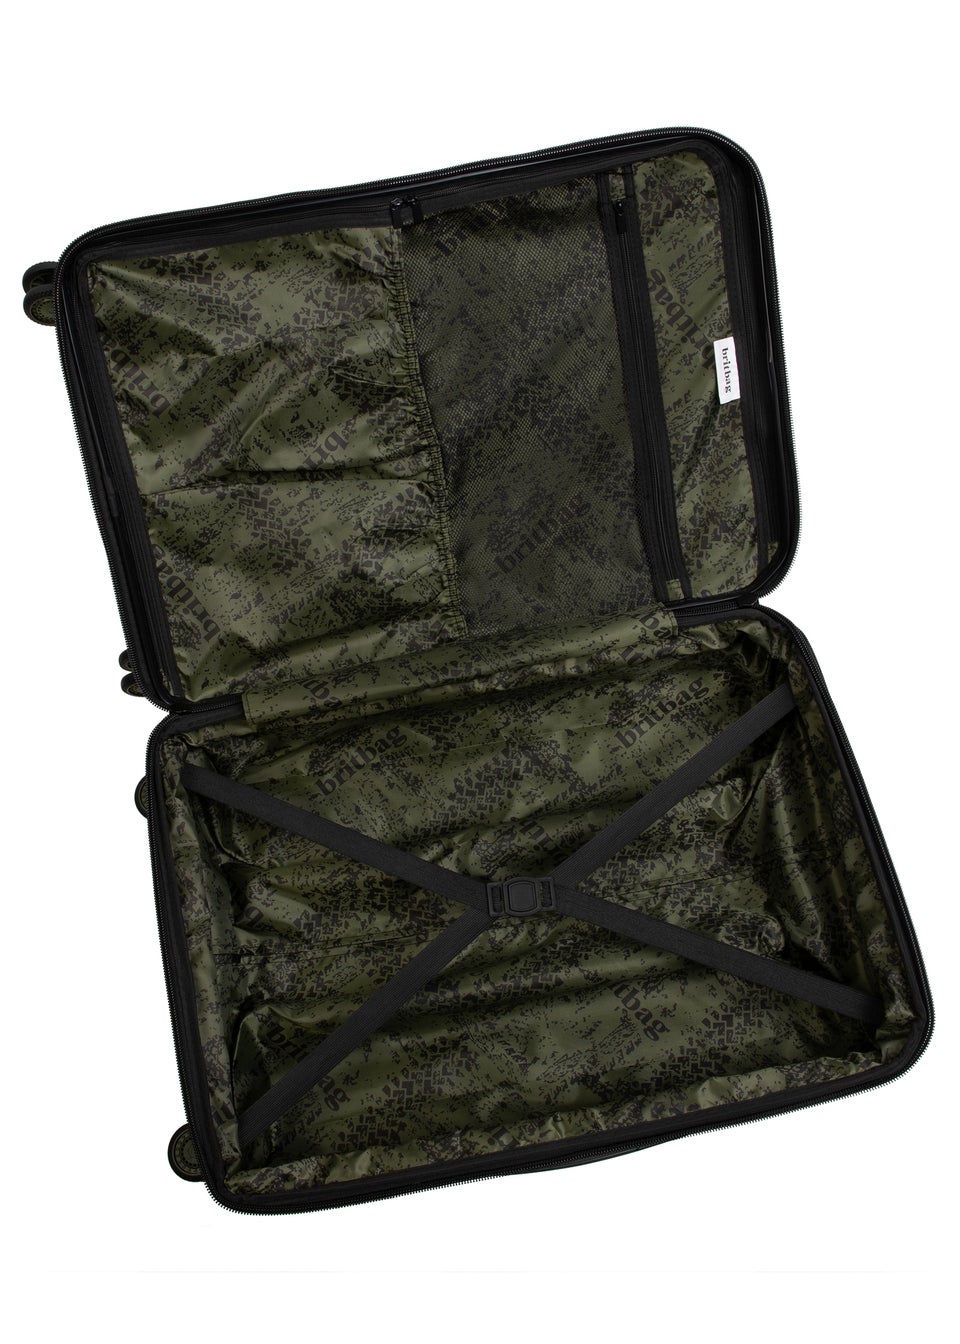 BritBag Annamite Moss Black/Green Geo Print Large Suitcase with TSA Lock